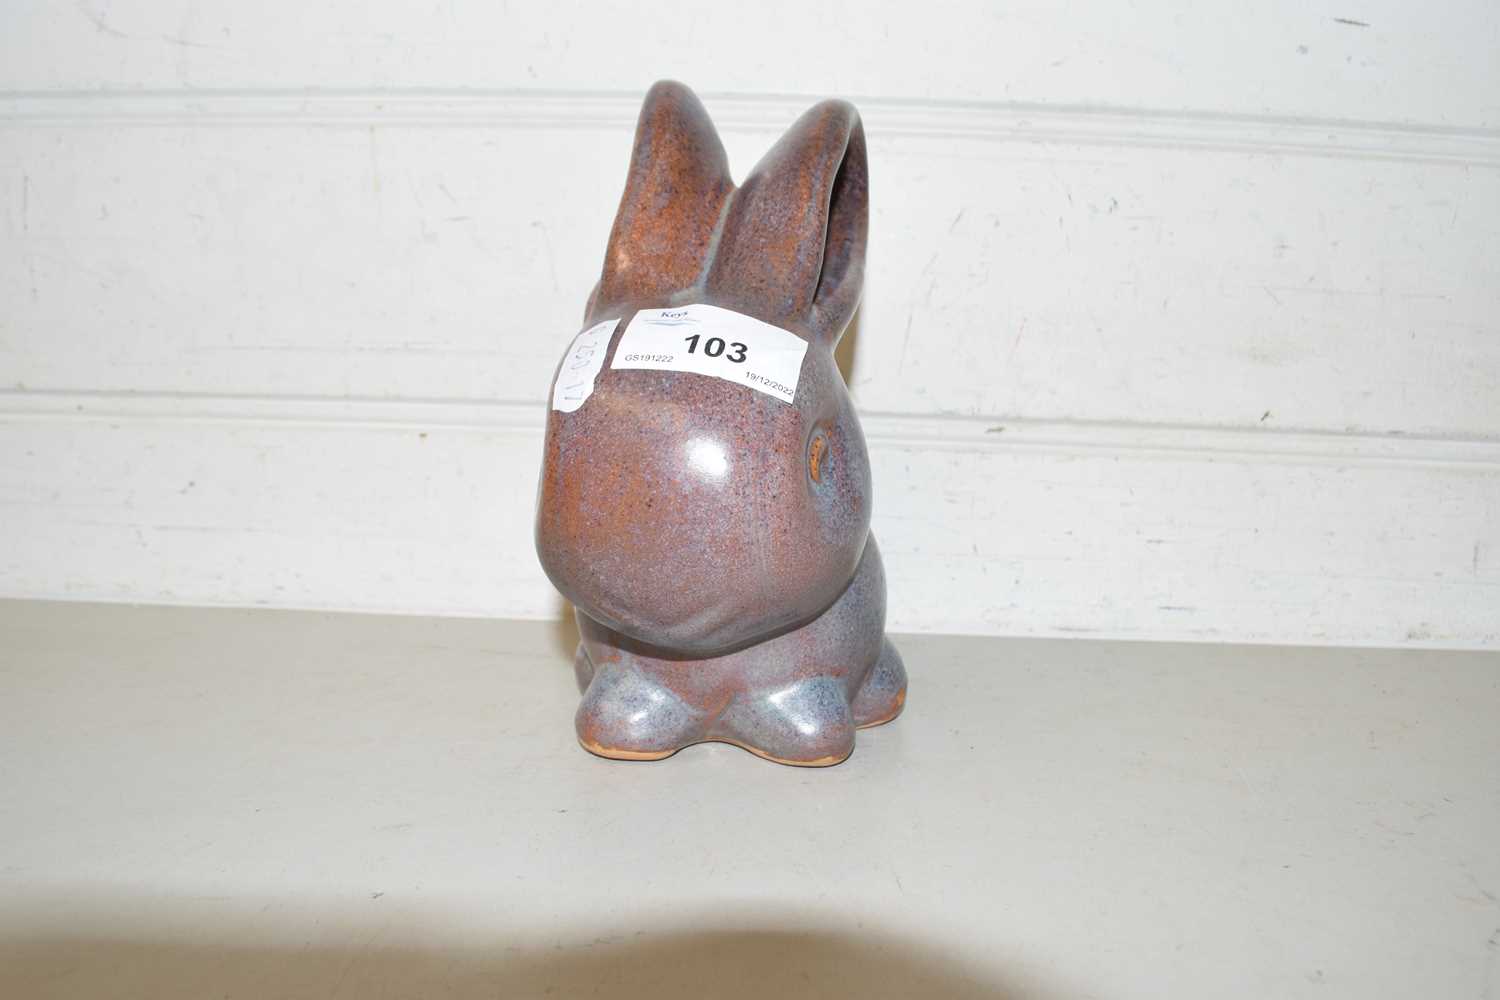 Unusual Bourne Denby model of a rabbit